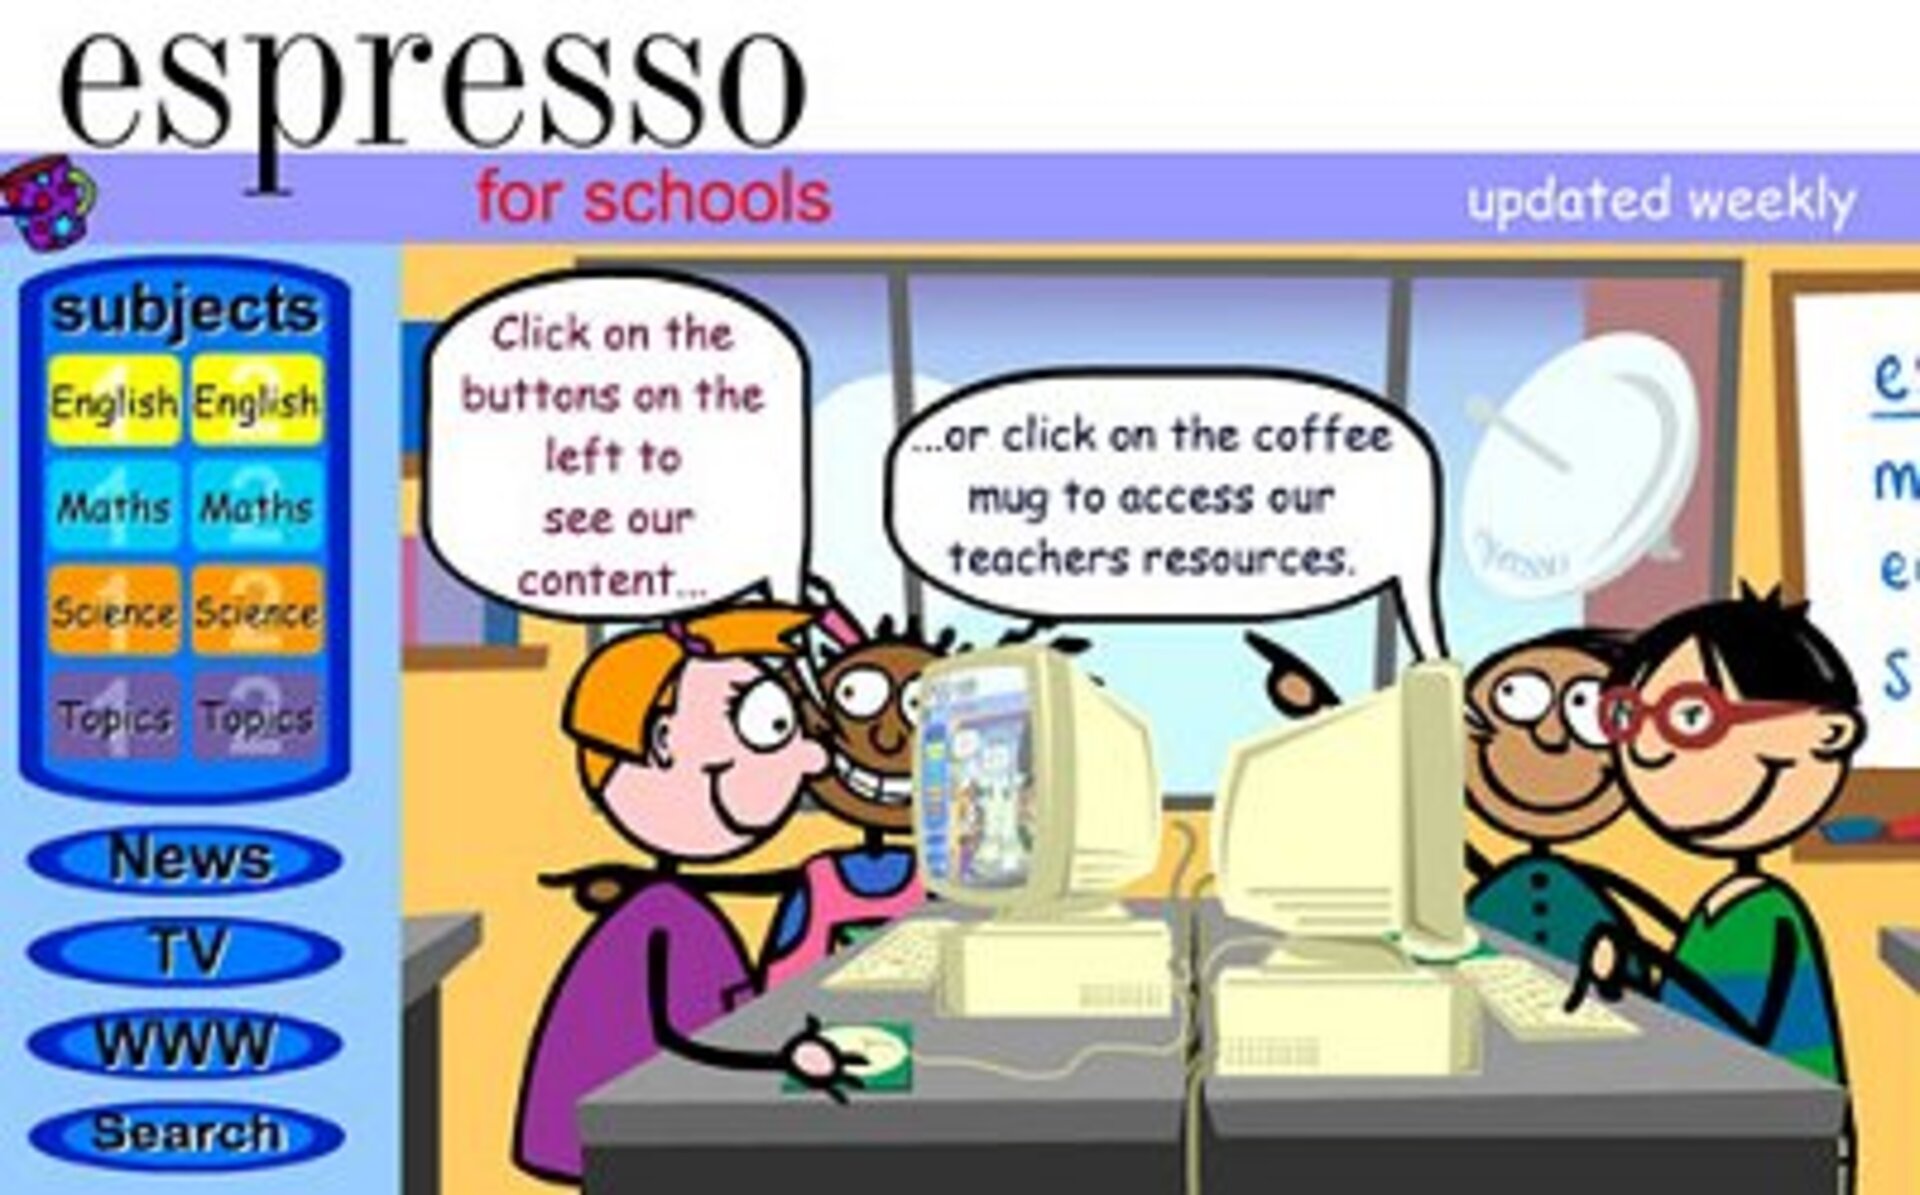 Espresso for schools